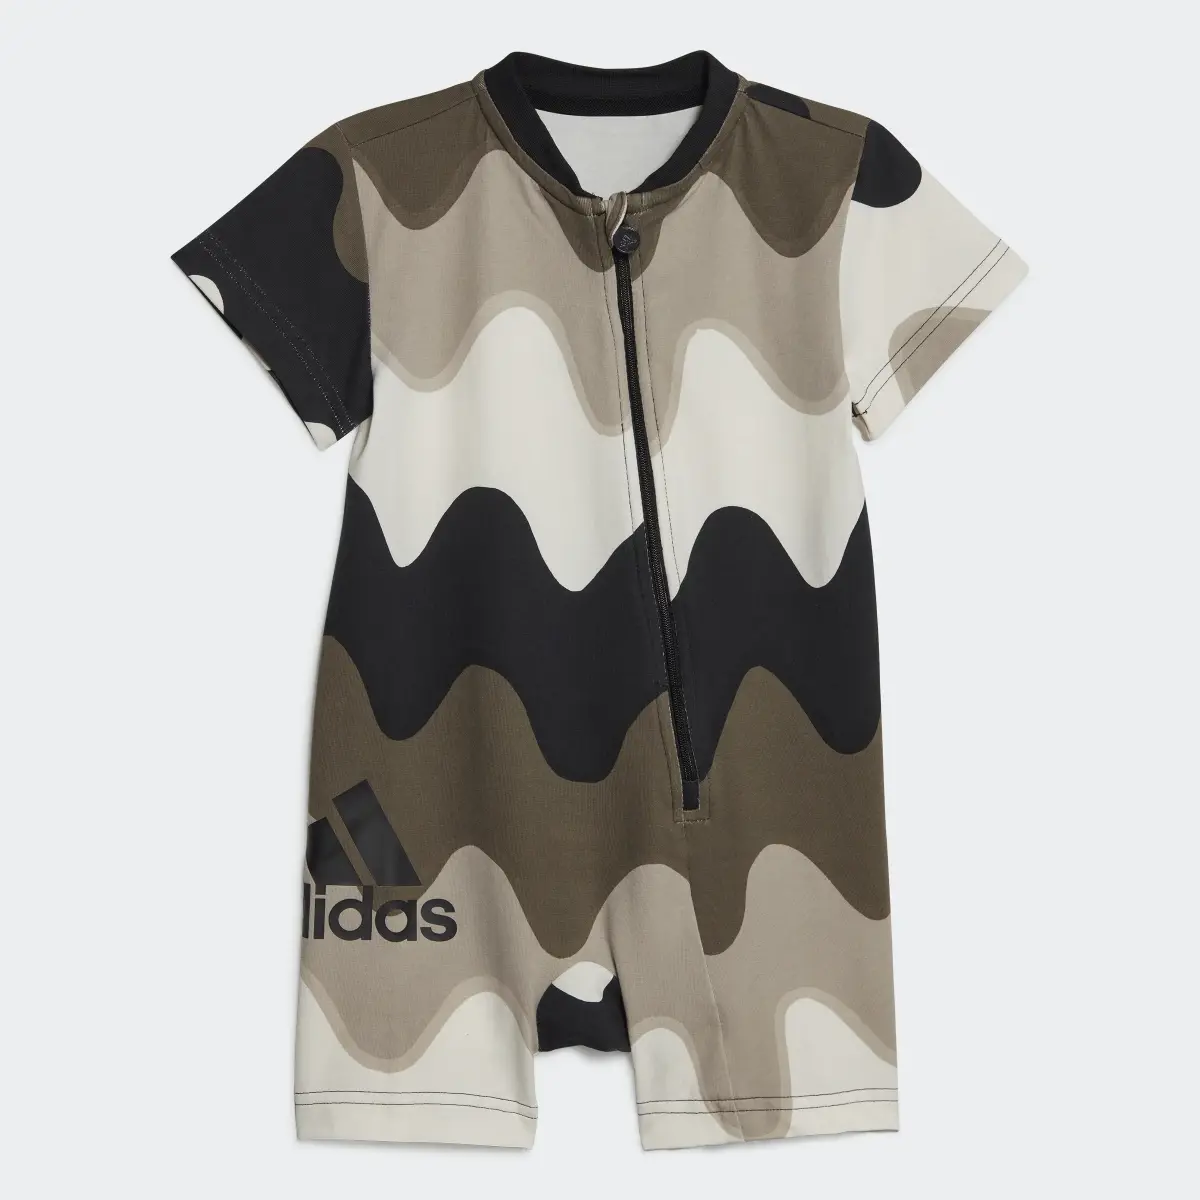 Adidas x Marimekko Allover Print Cotton Bodysuit. 2